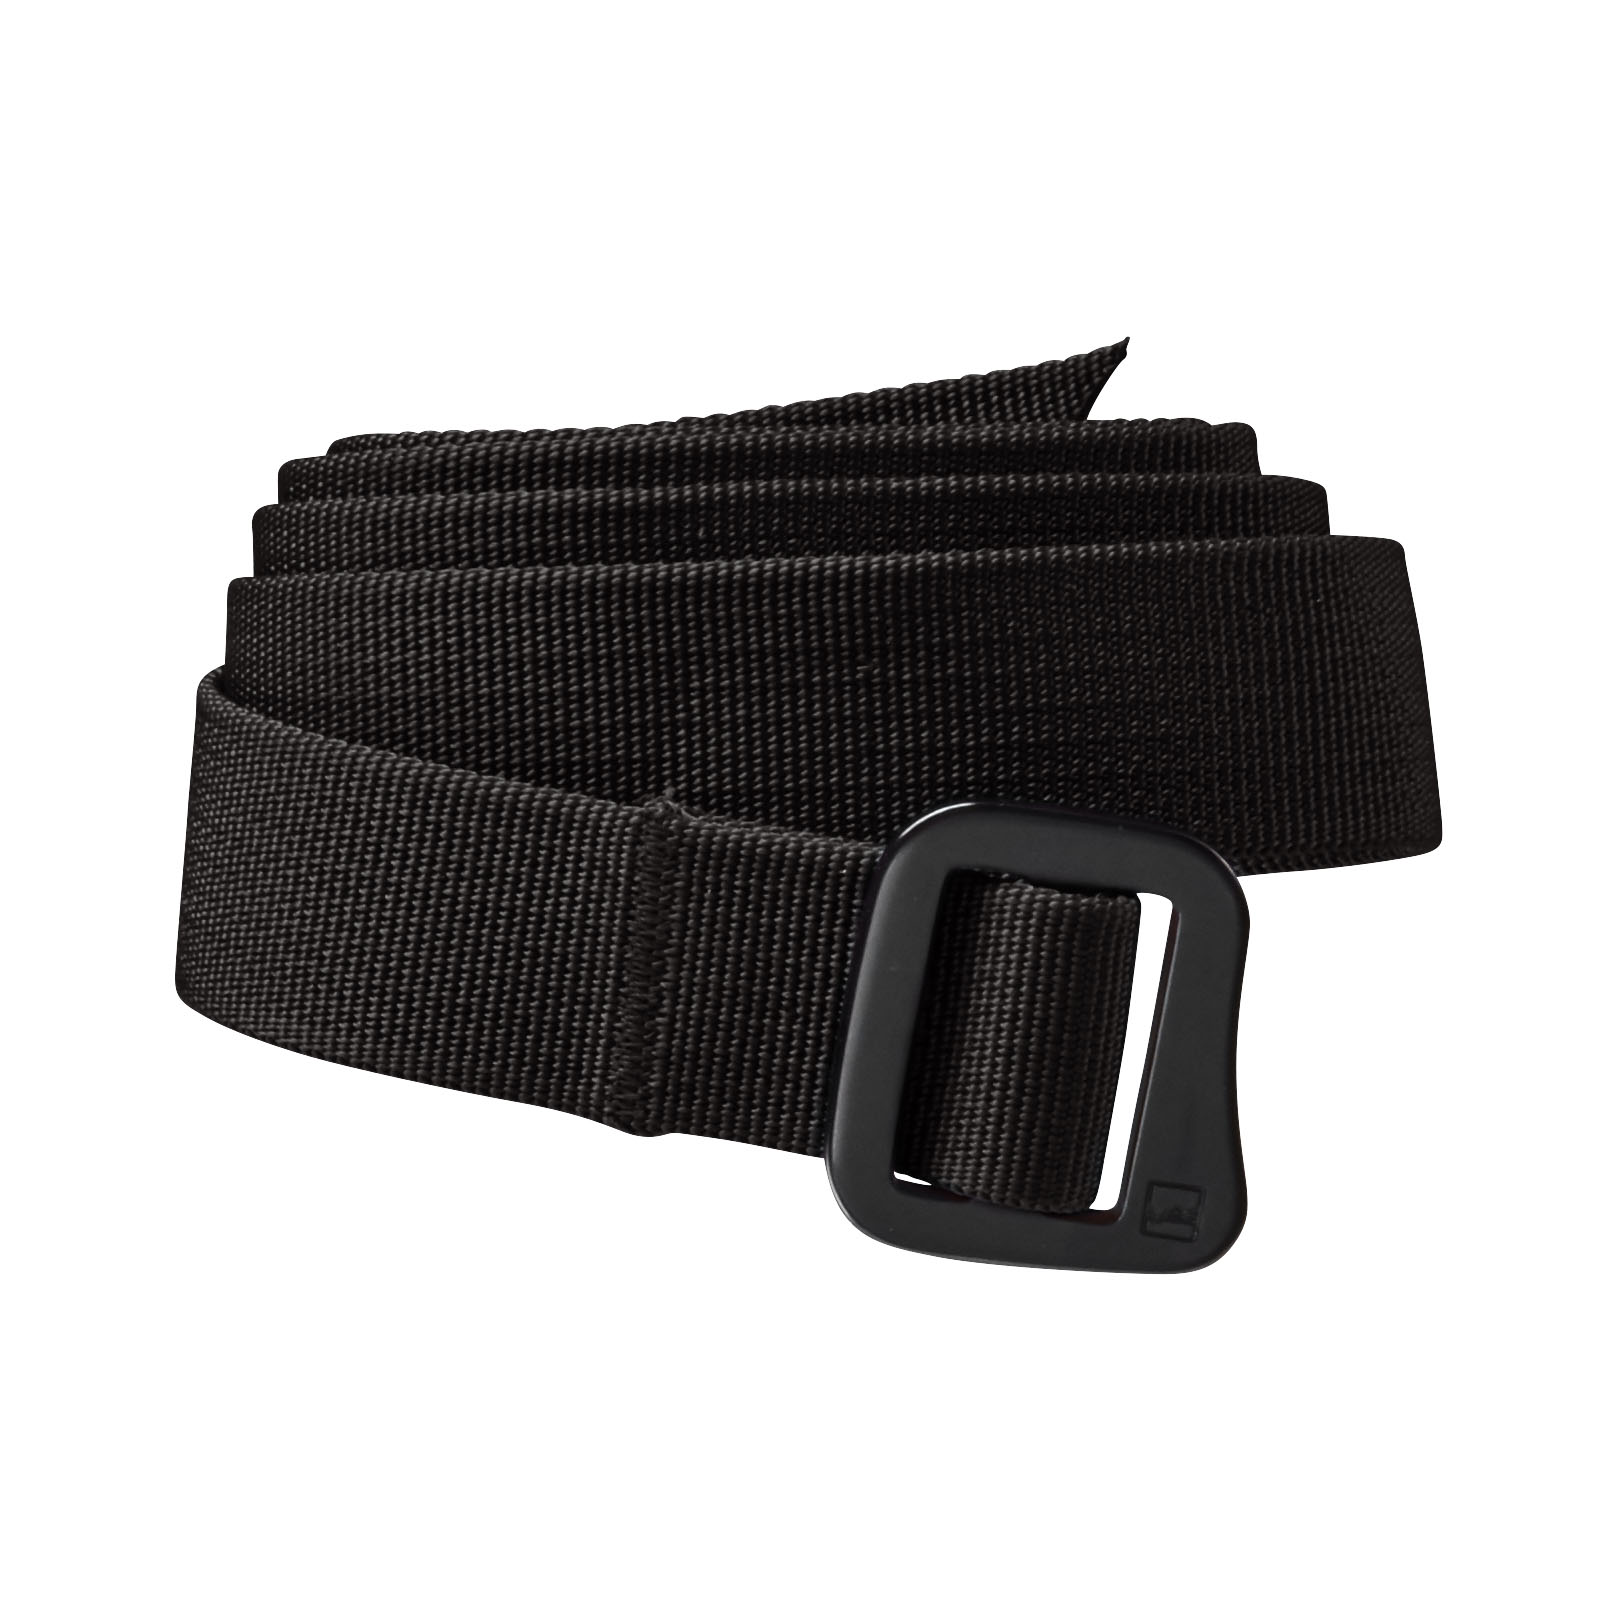 Patagonia - Friction Belt - Belts